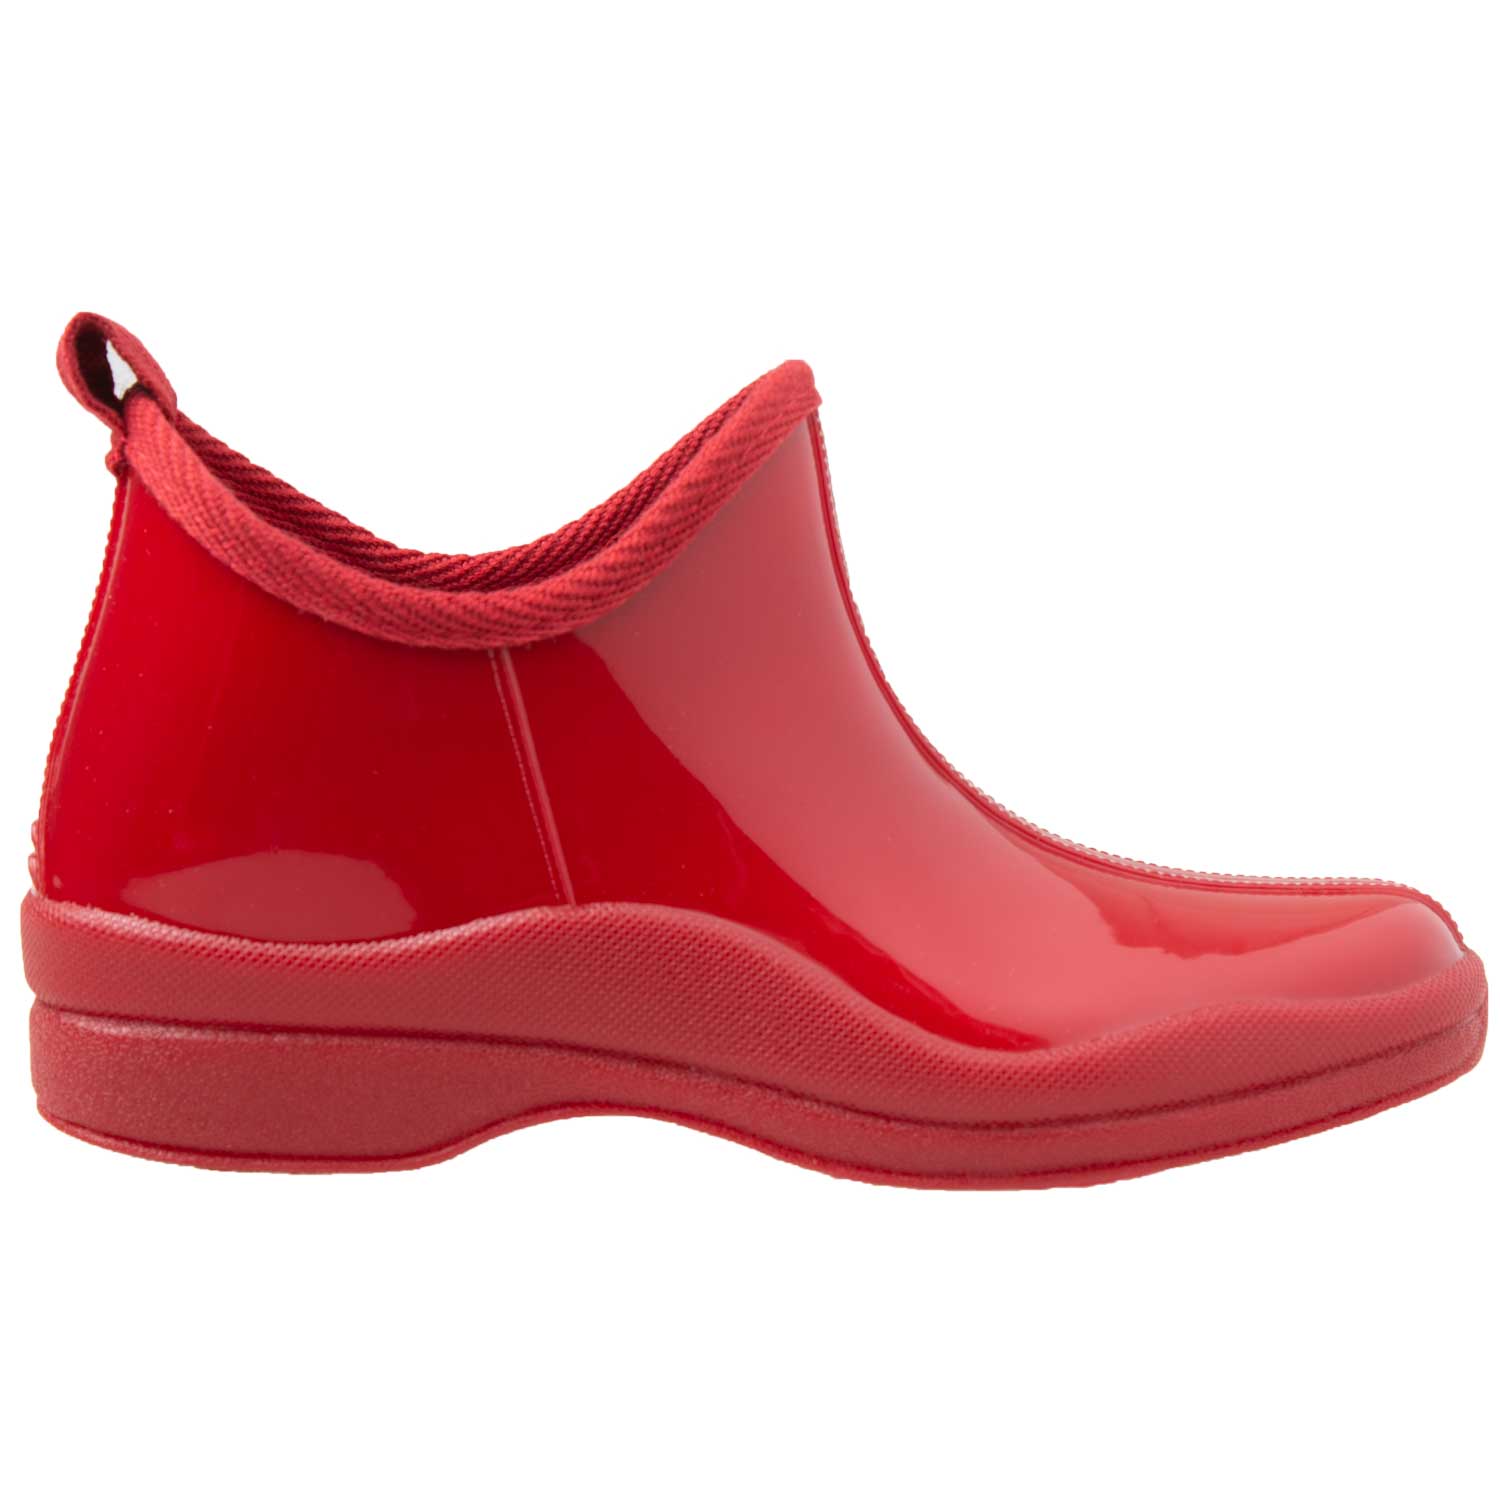 Simon Chang - Women's rubber rain booties, size 7